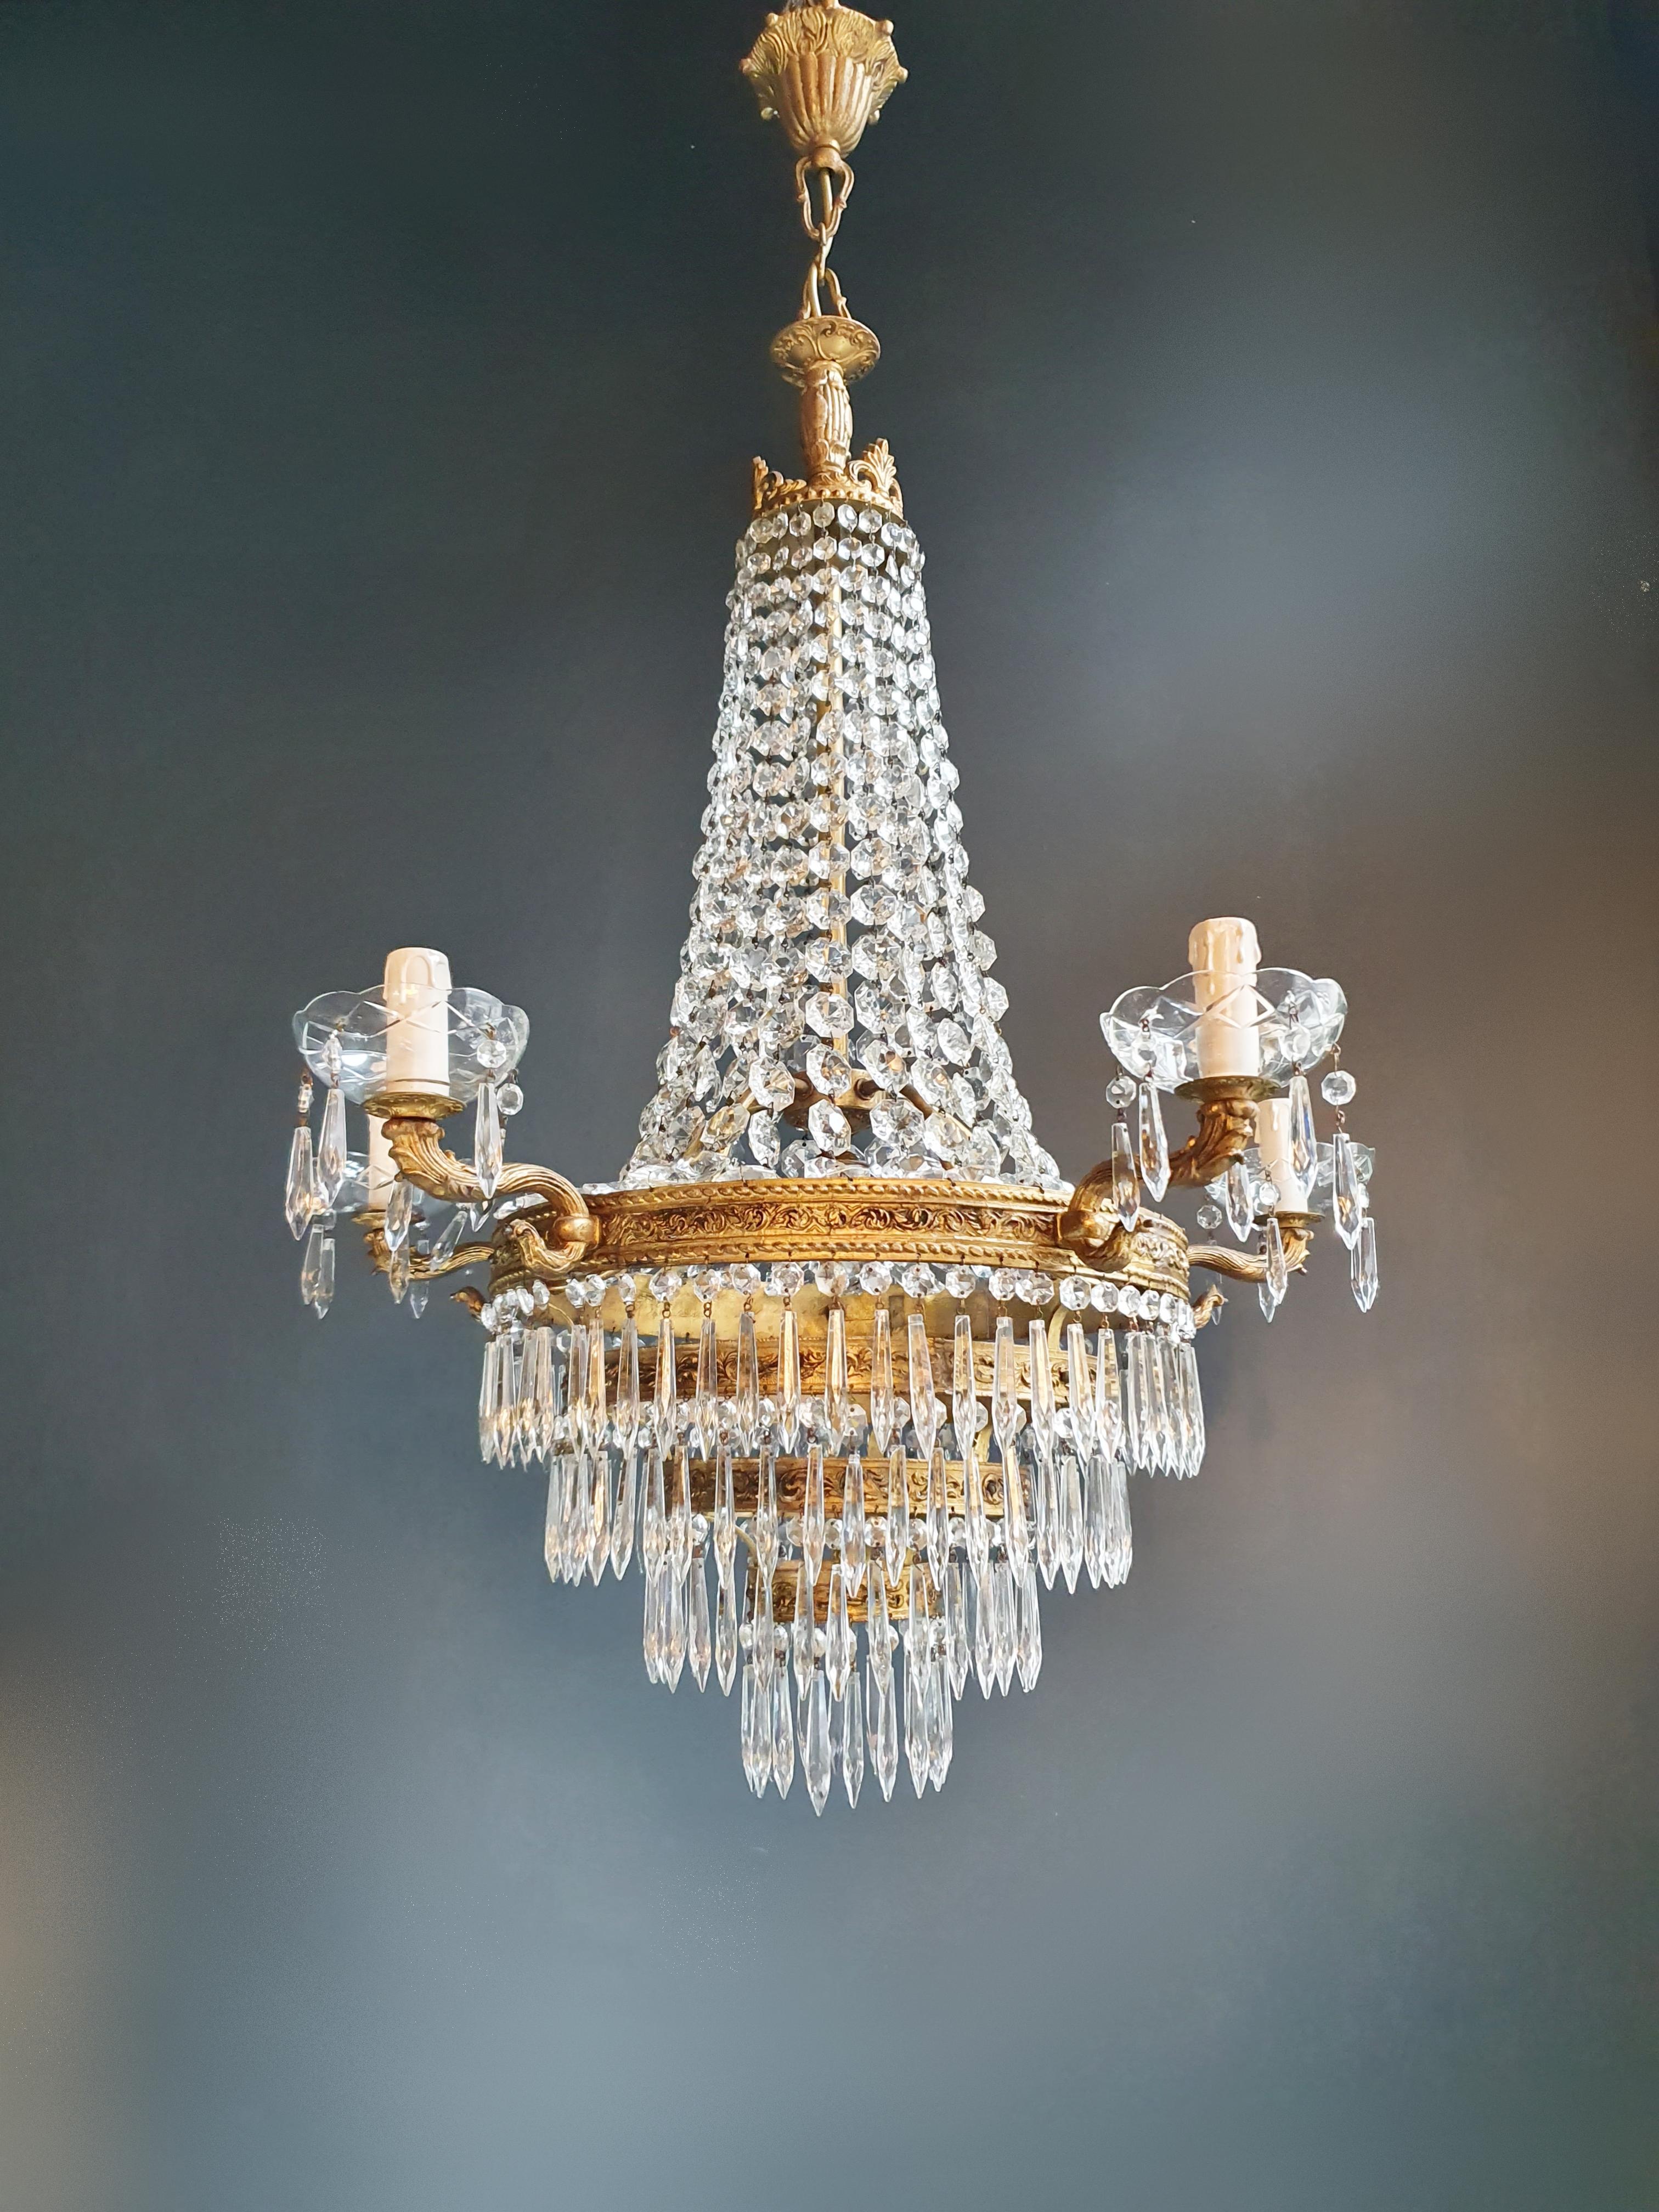 Montgolfiè Empire Sac a Pearl Chandelier Crystal Lustre Ceiling Lamp Antique For Sale 2